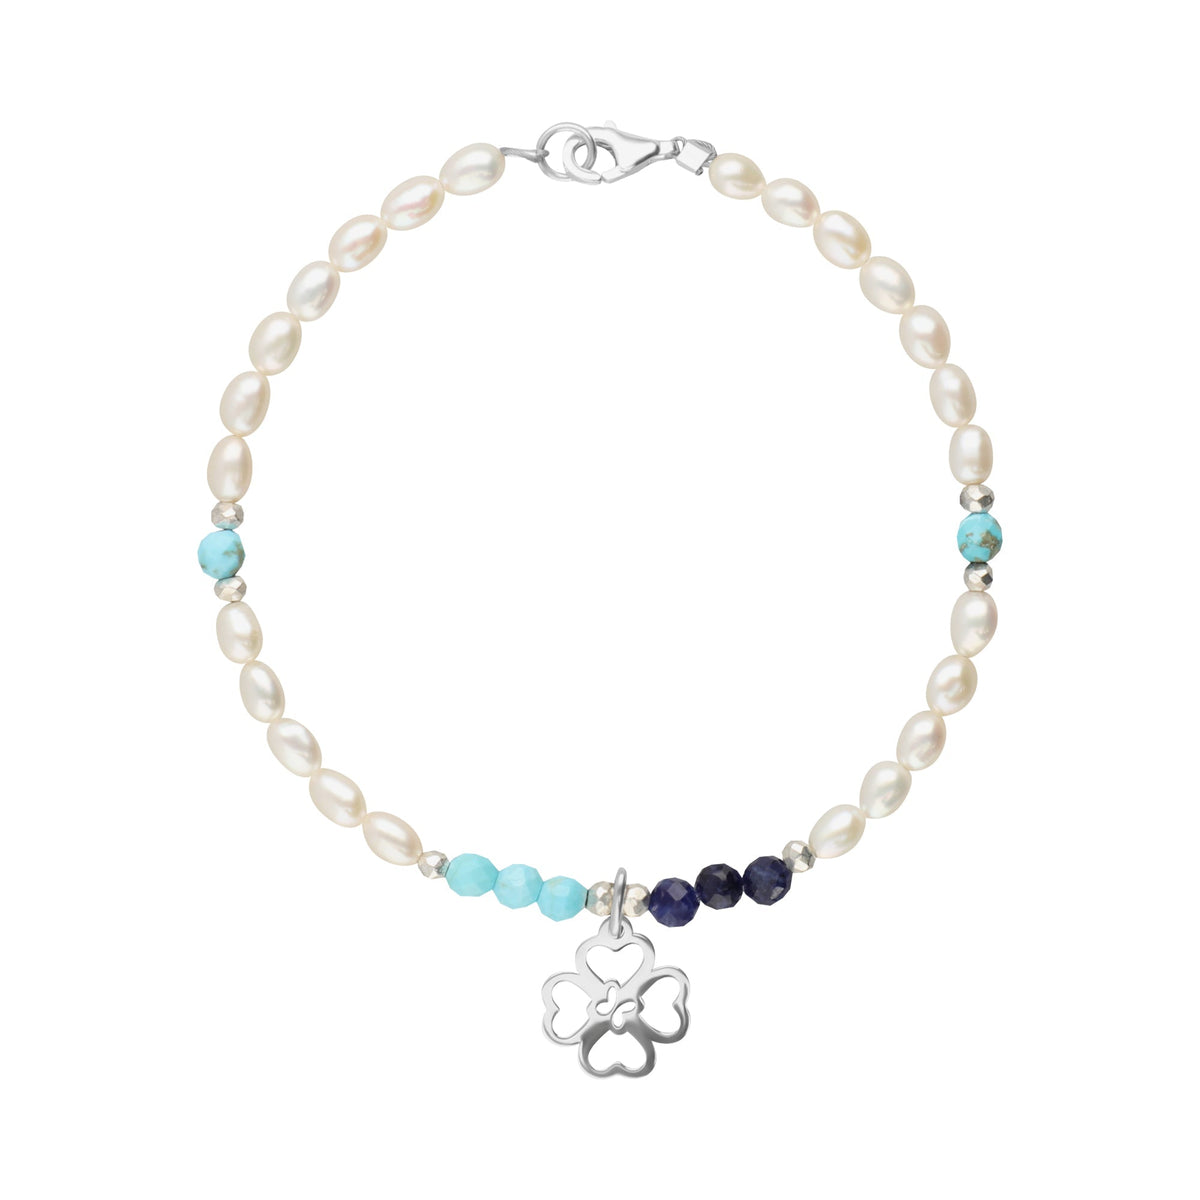 Bracelet 925 Silver Women Carisma Clover Turquoise / Sodolite / Pearls